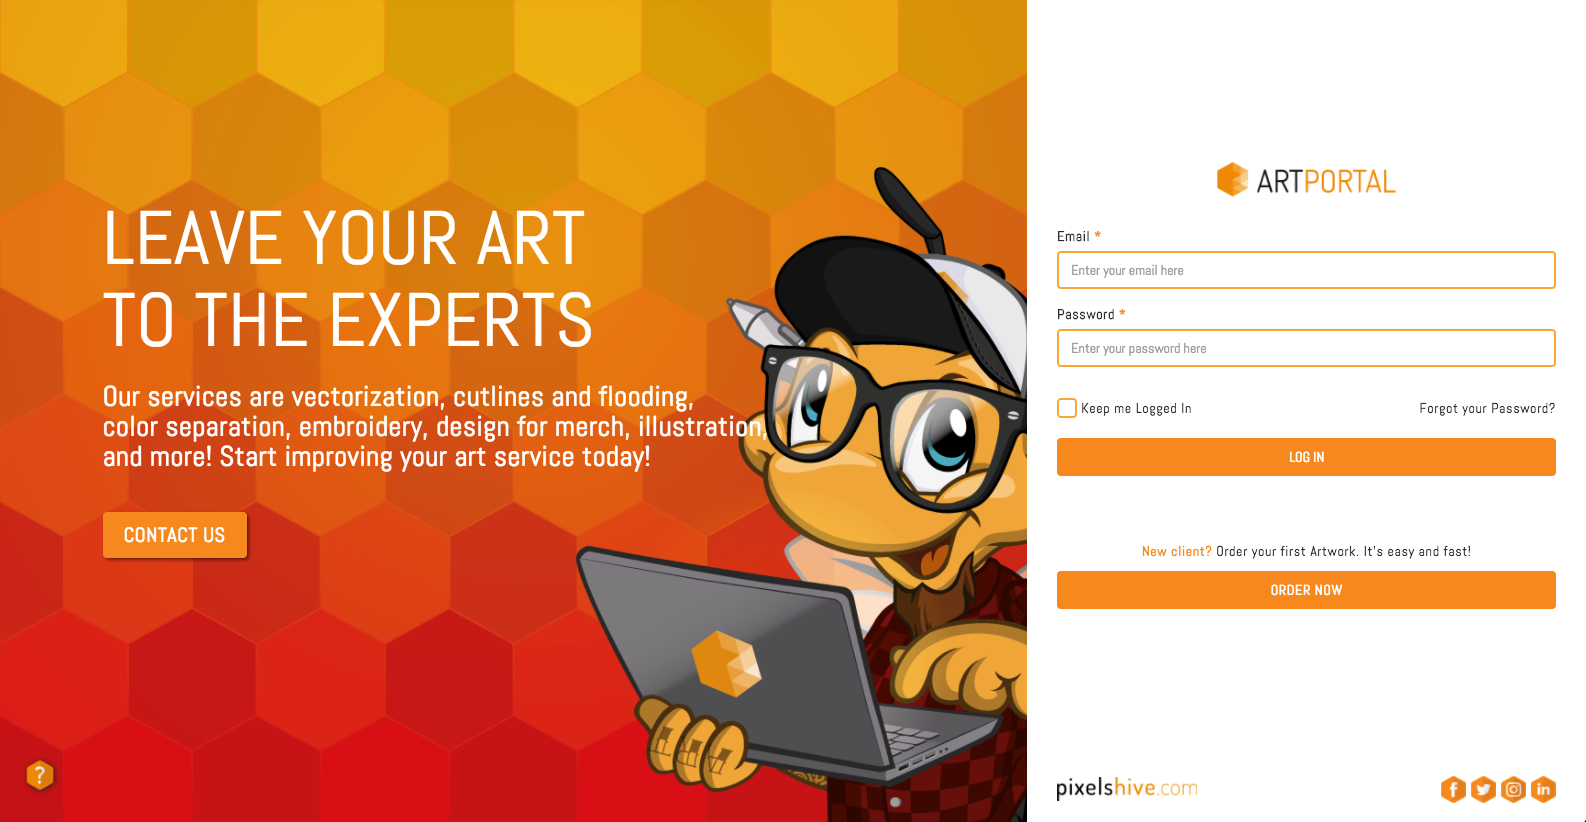 New Art Portal Release: Fast Order Management & Art Link